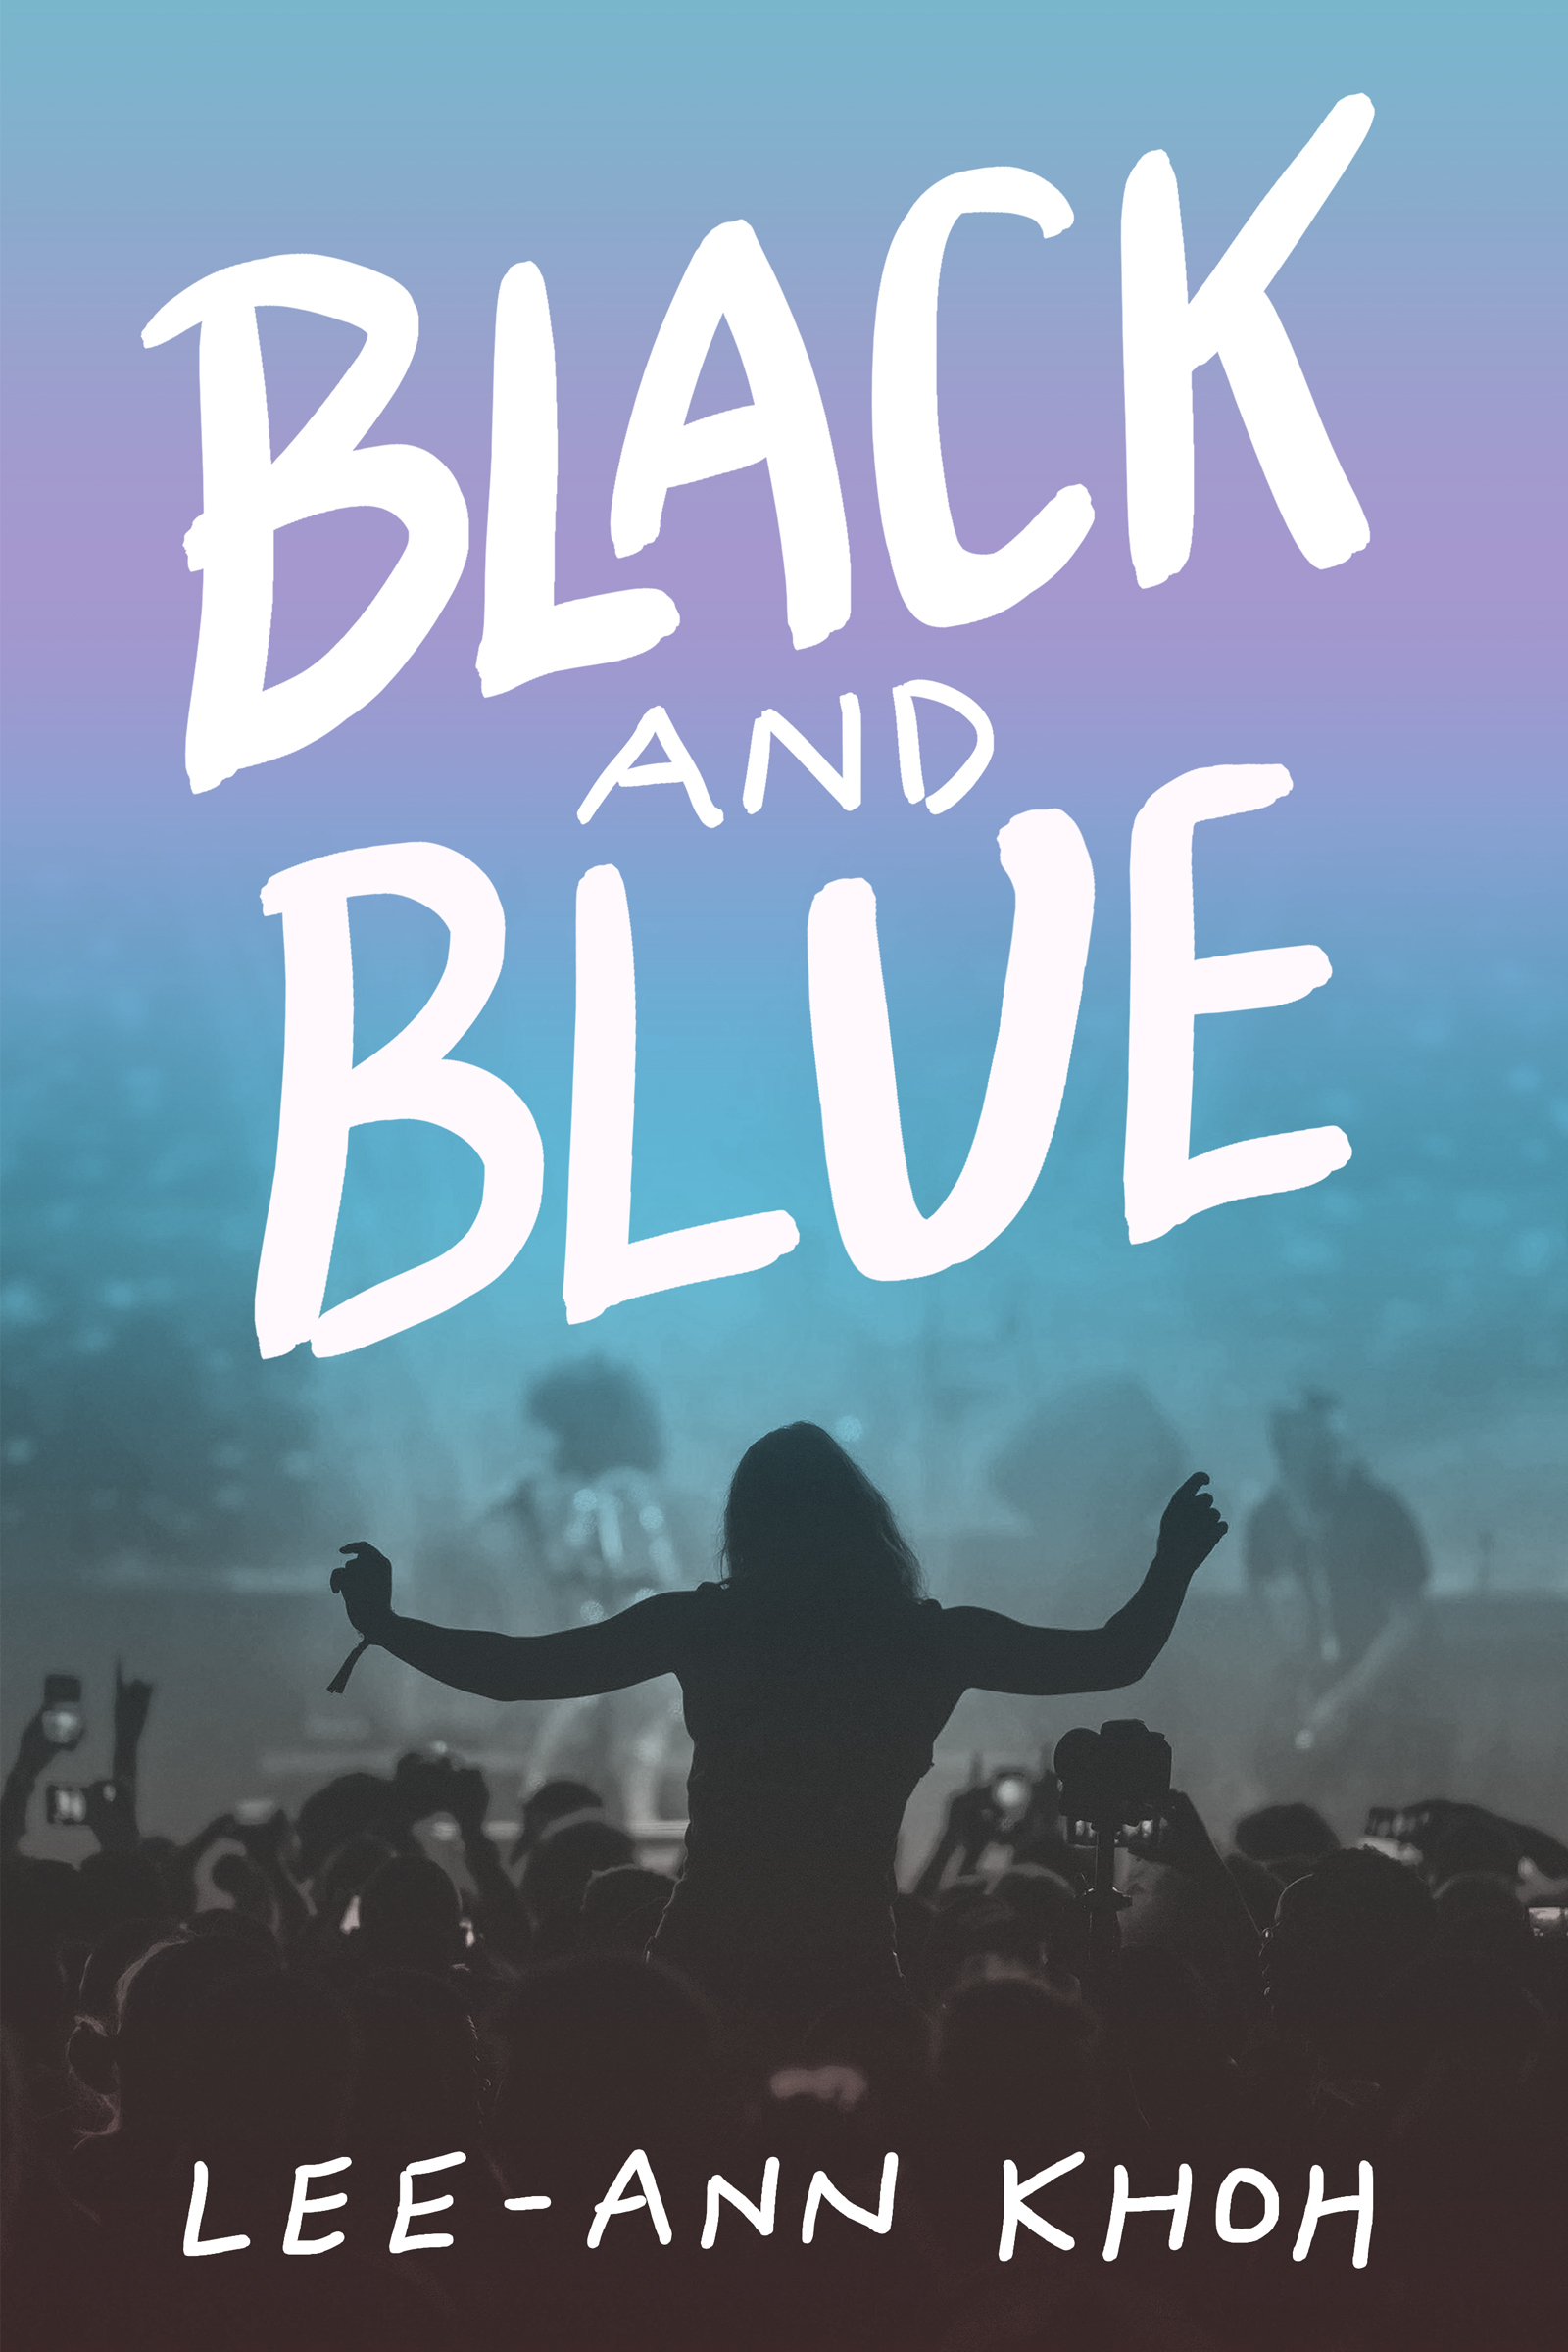 Black and Blue LEE-ANN. KHOH Book Cover